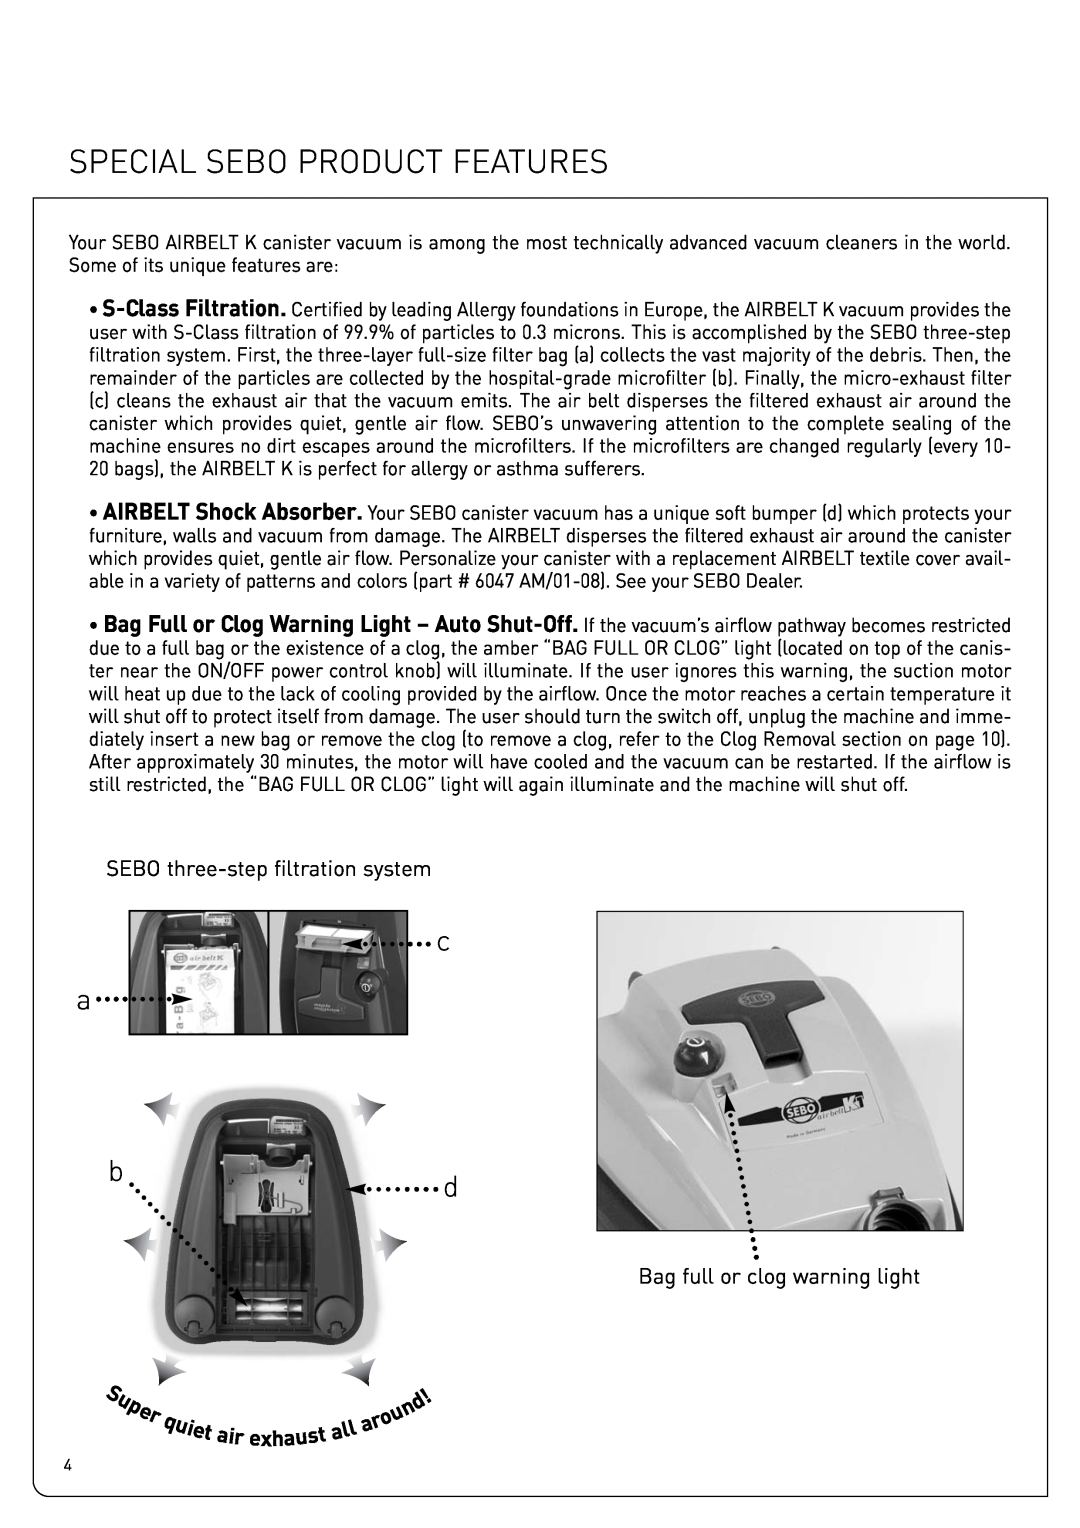 Sebo K owner manual Special Sebo Product Features, SEBO three-stepfiltration system, Bag full or clog warning light 